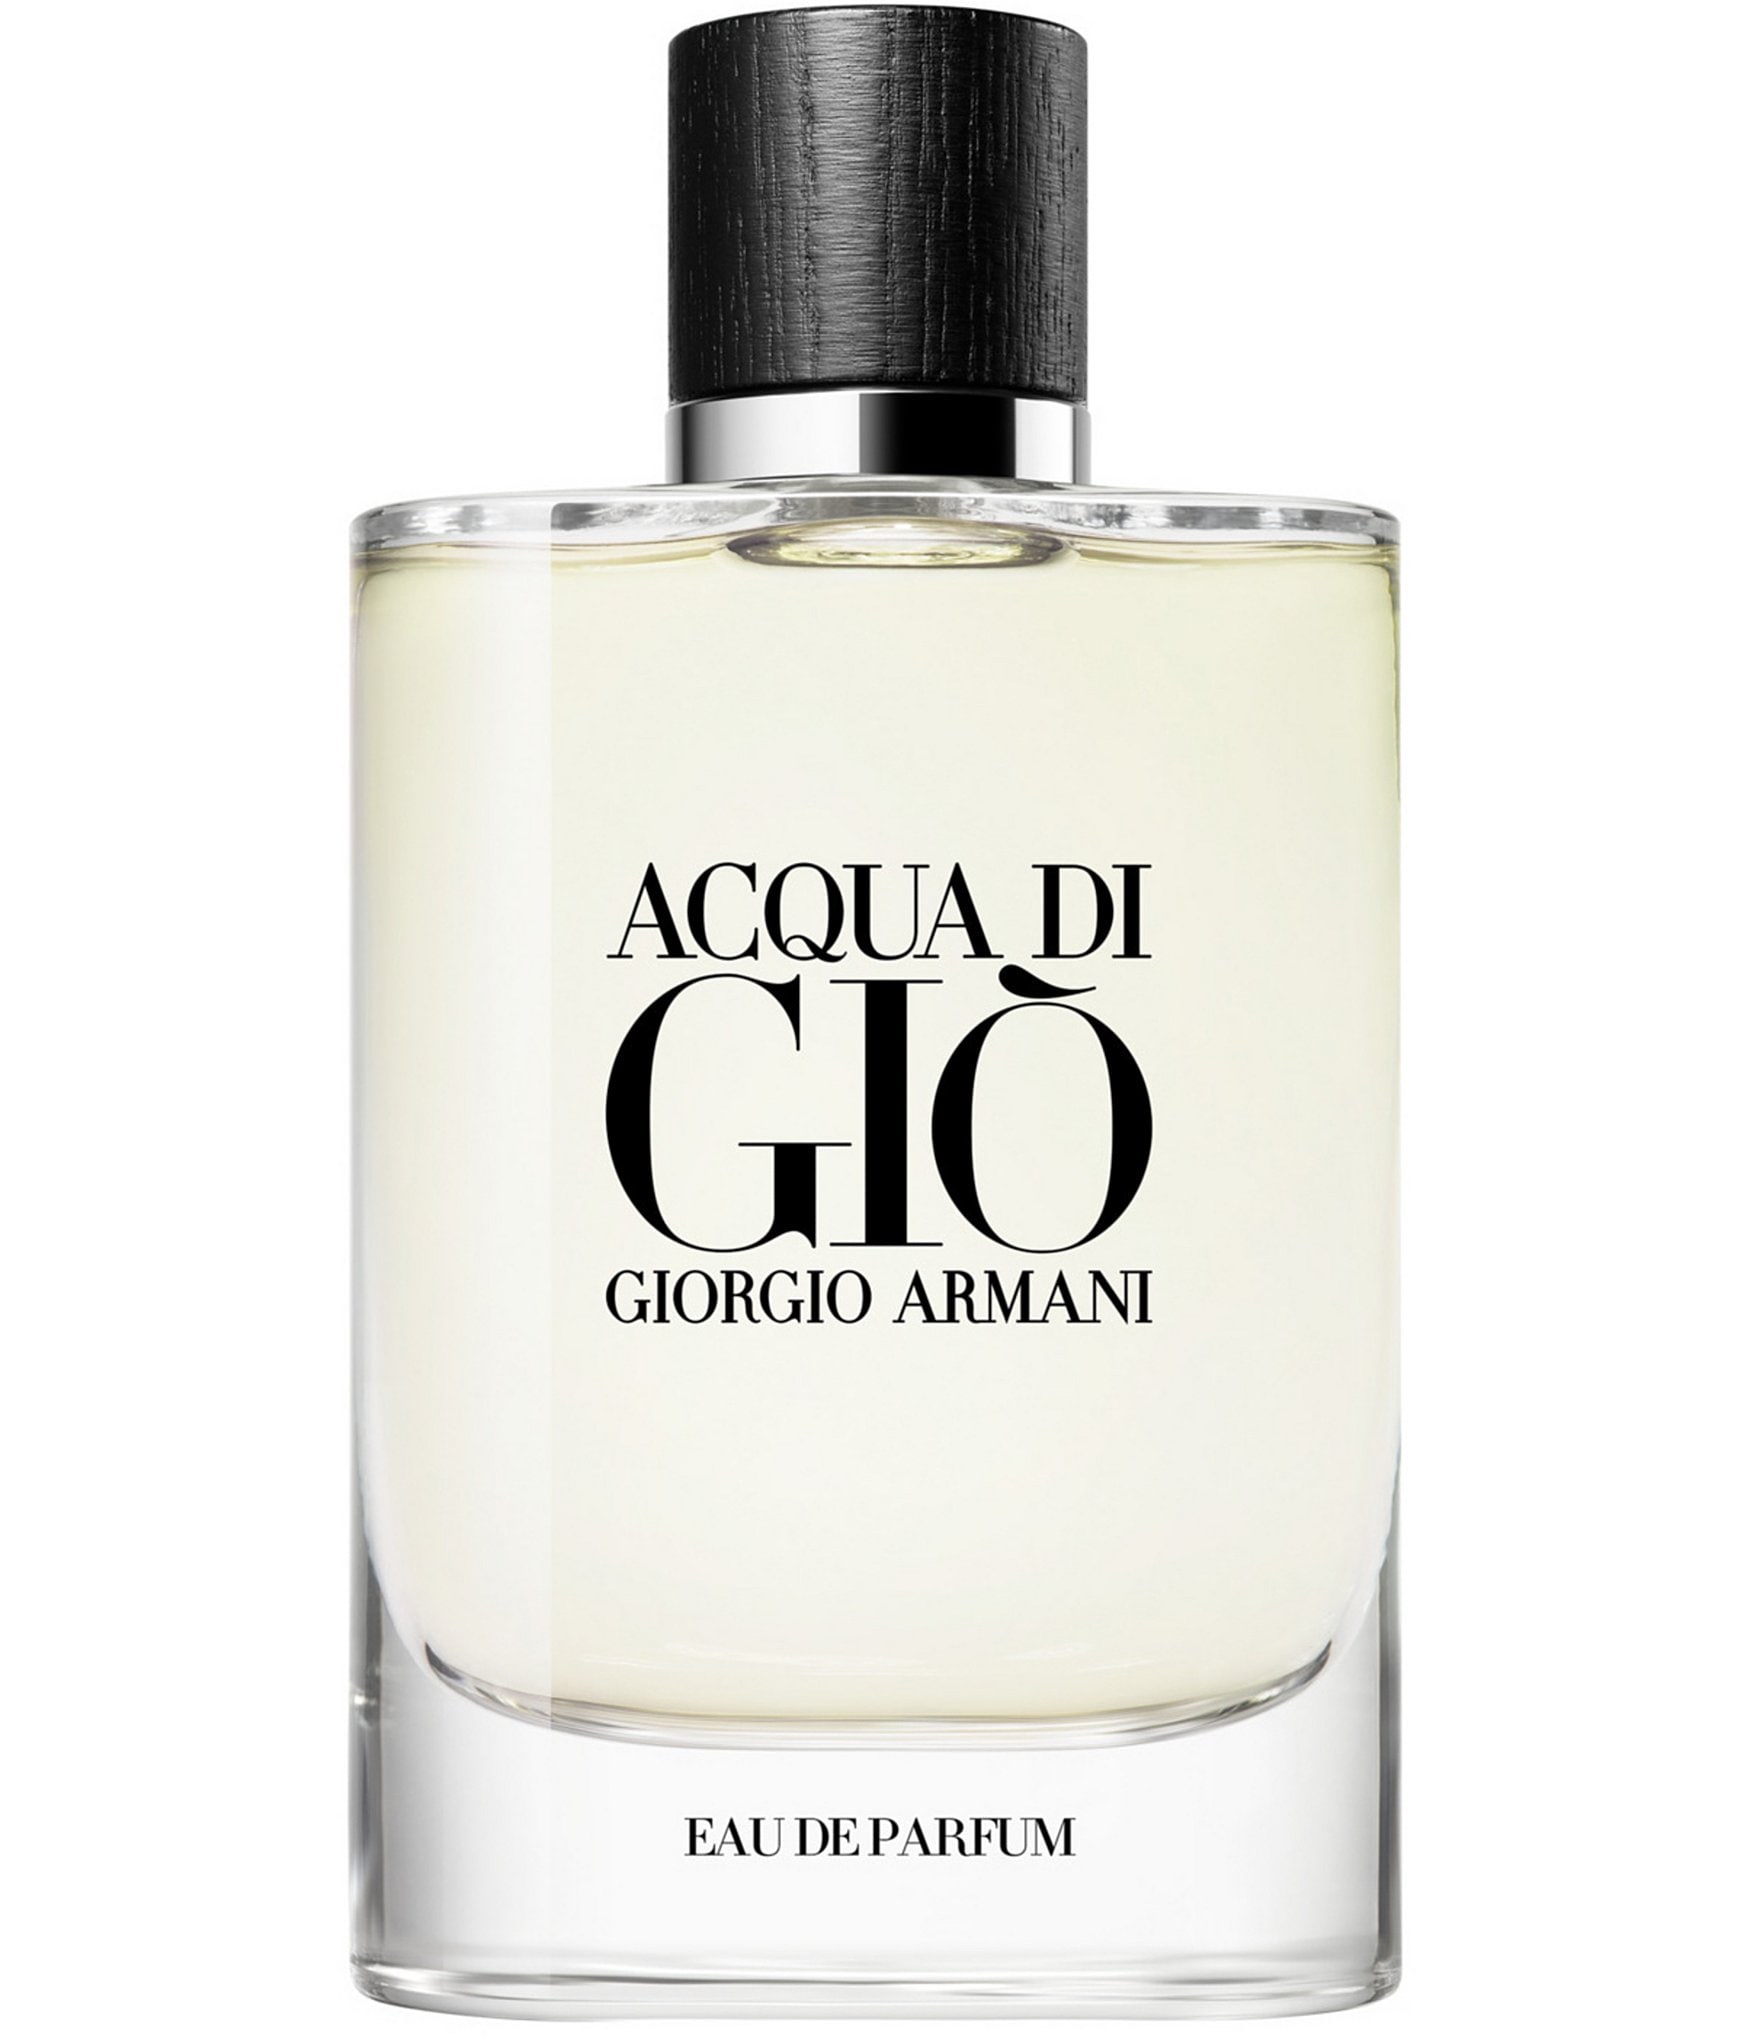 Giorgio Armani Makeup, Skincare & Fragrance